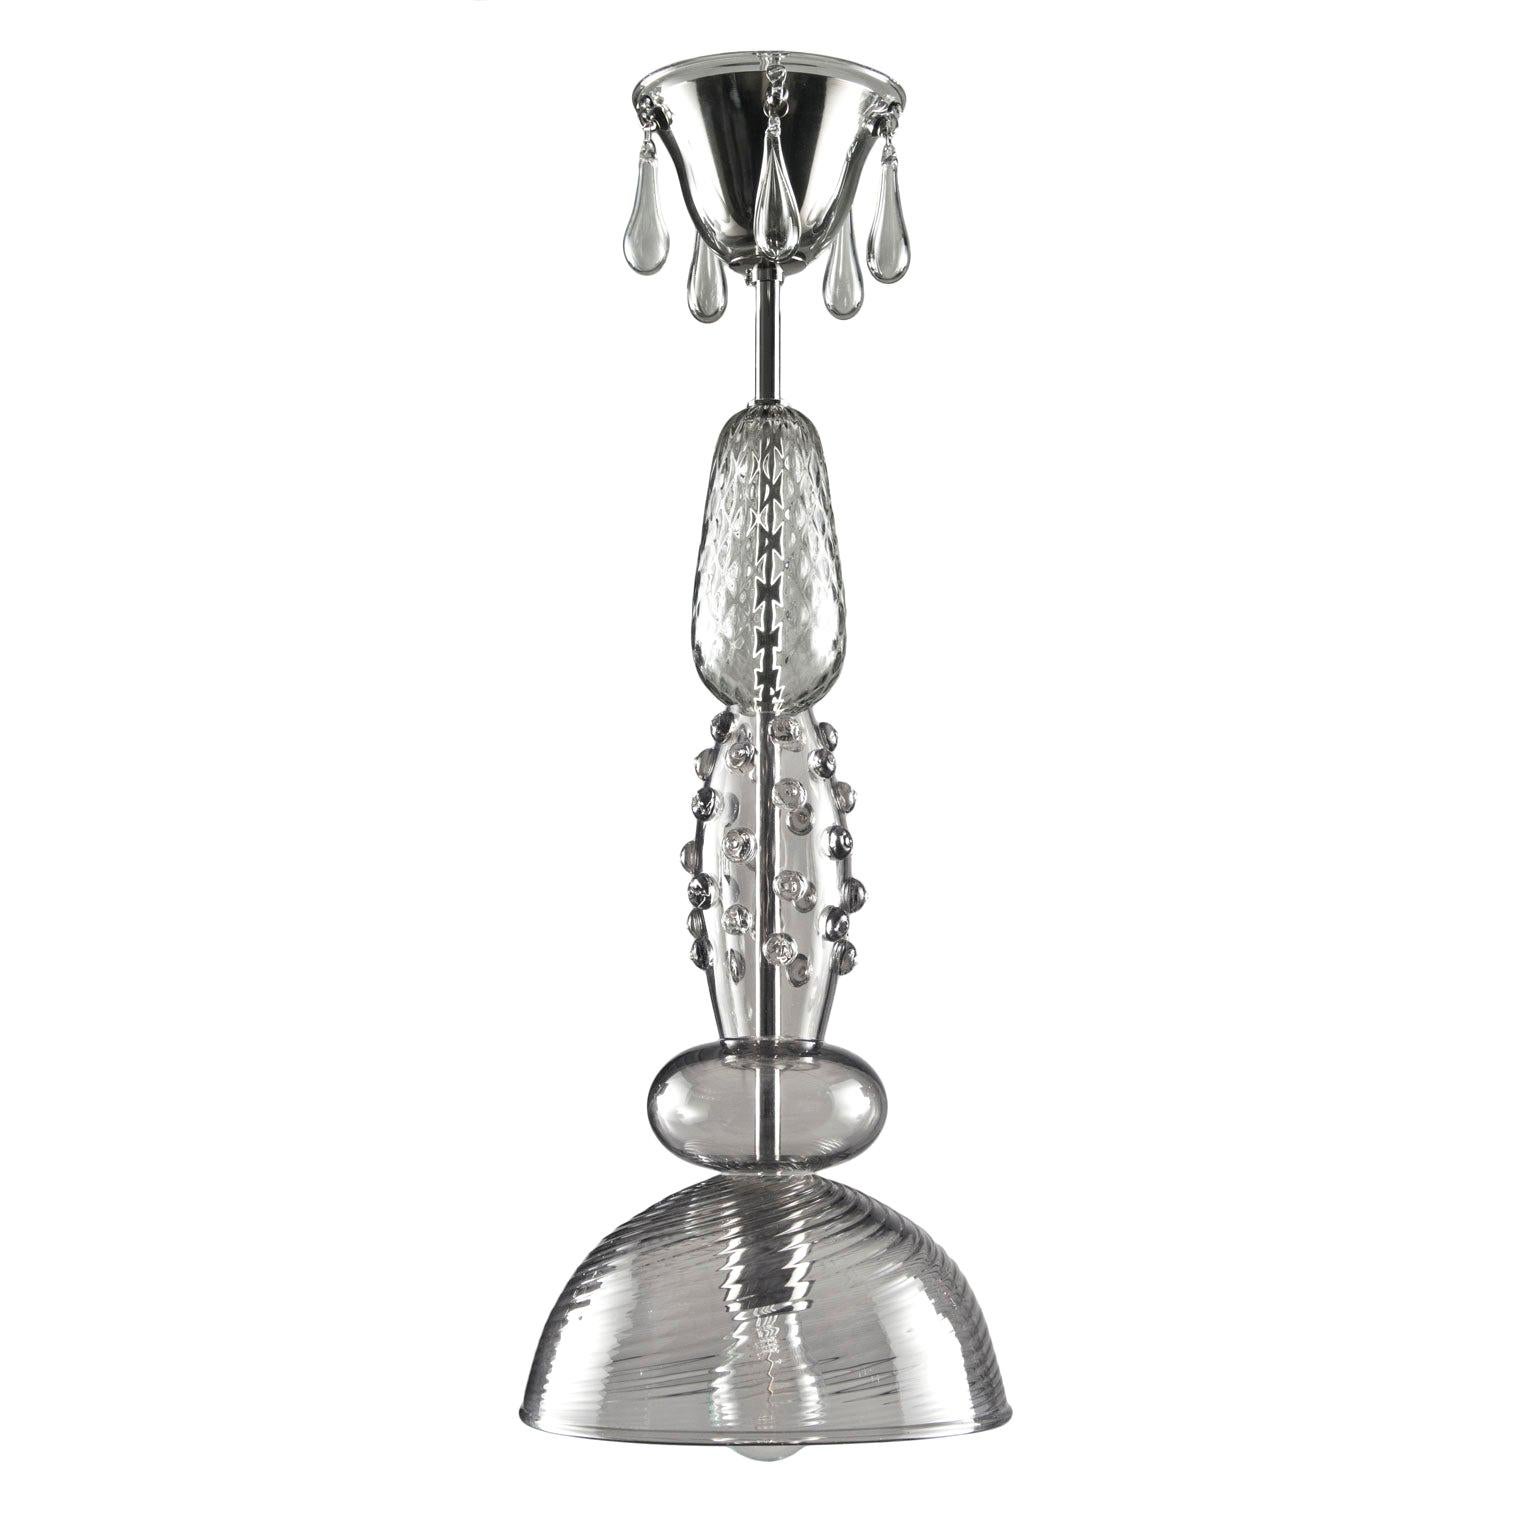 Artistic Suspension Lamp handblown in Grey Murano Glass by Multiforme